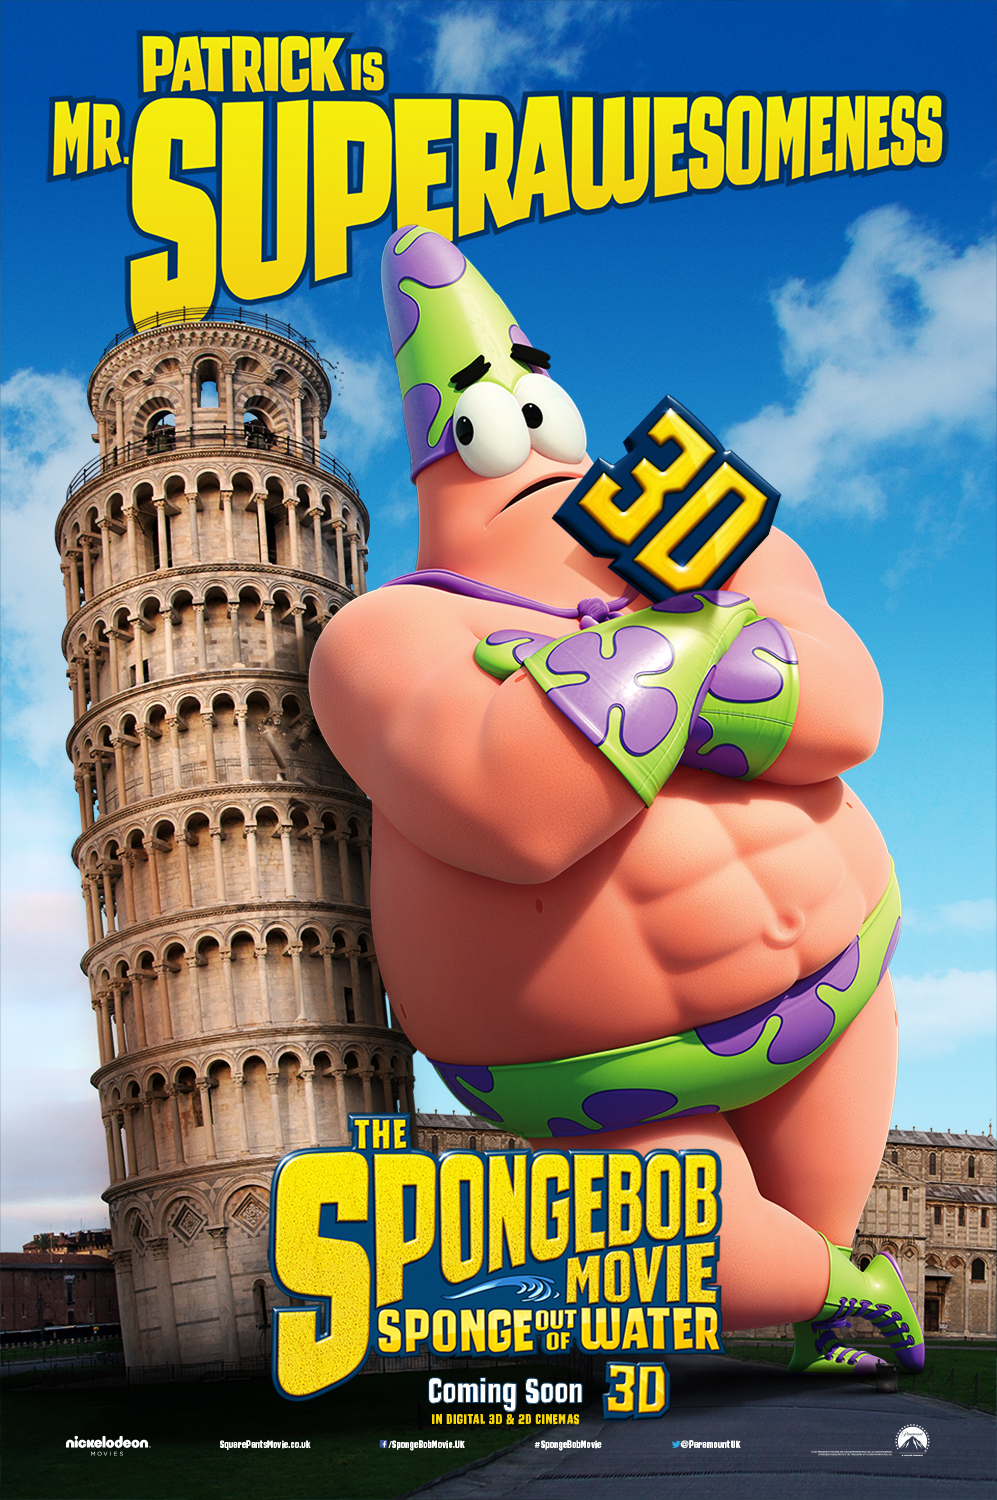 Spongebob Squarepants: The Movie Character Posters